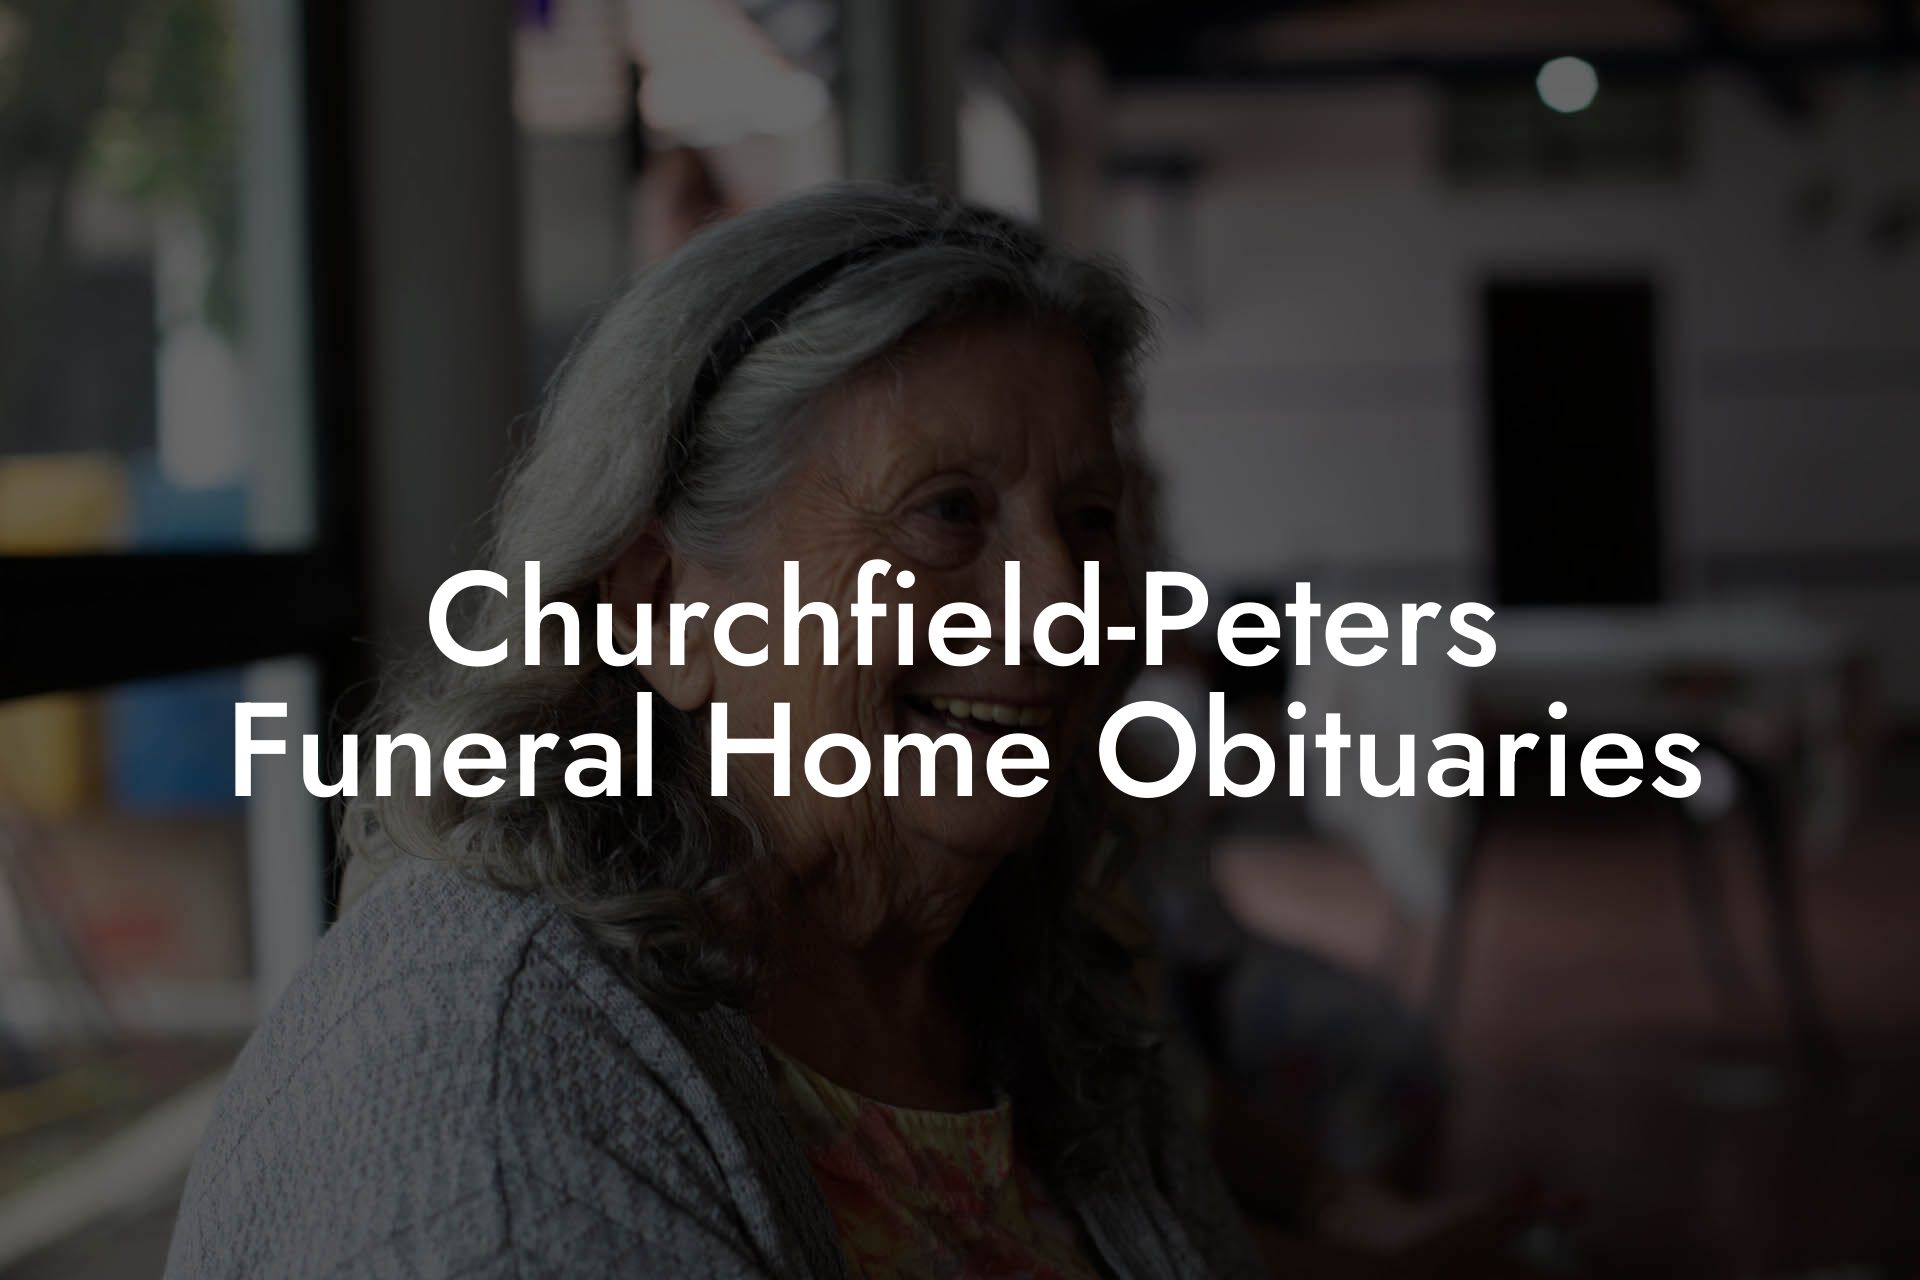 Churchfield-Peters Funeral Home Obituaries